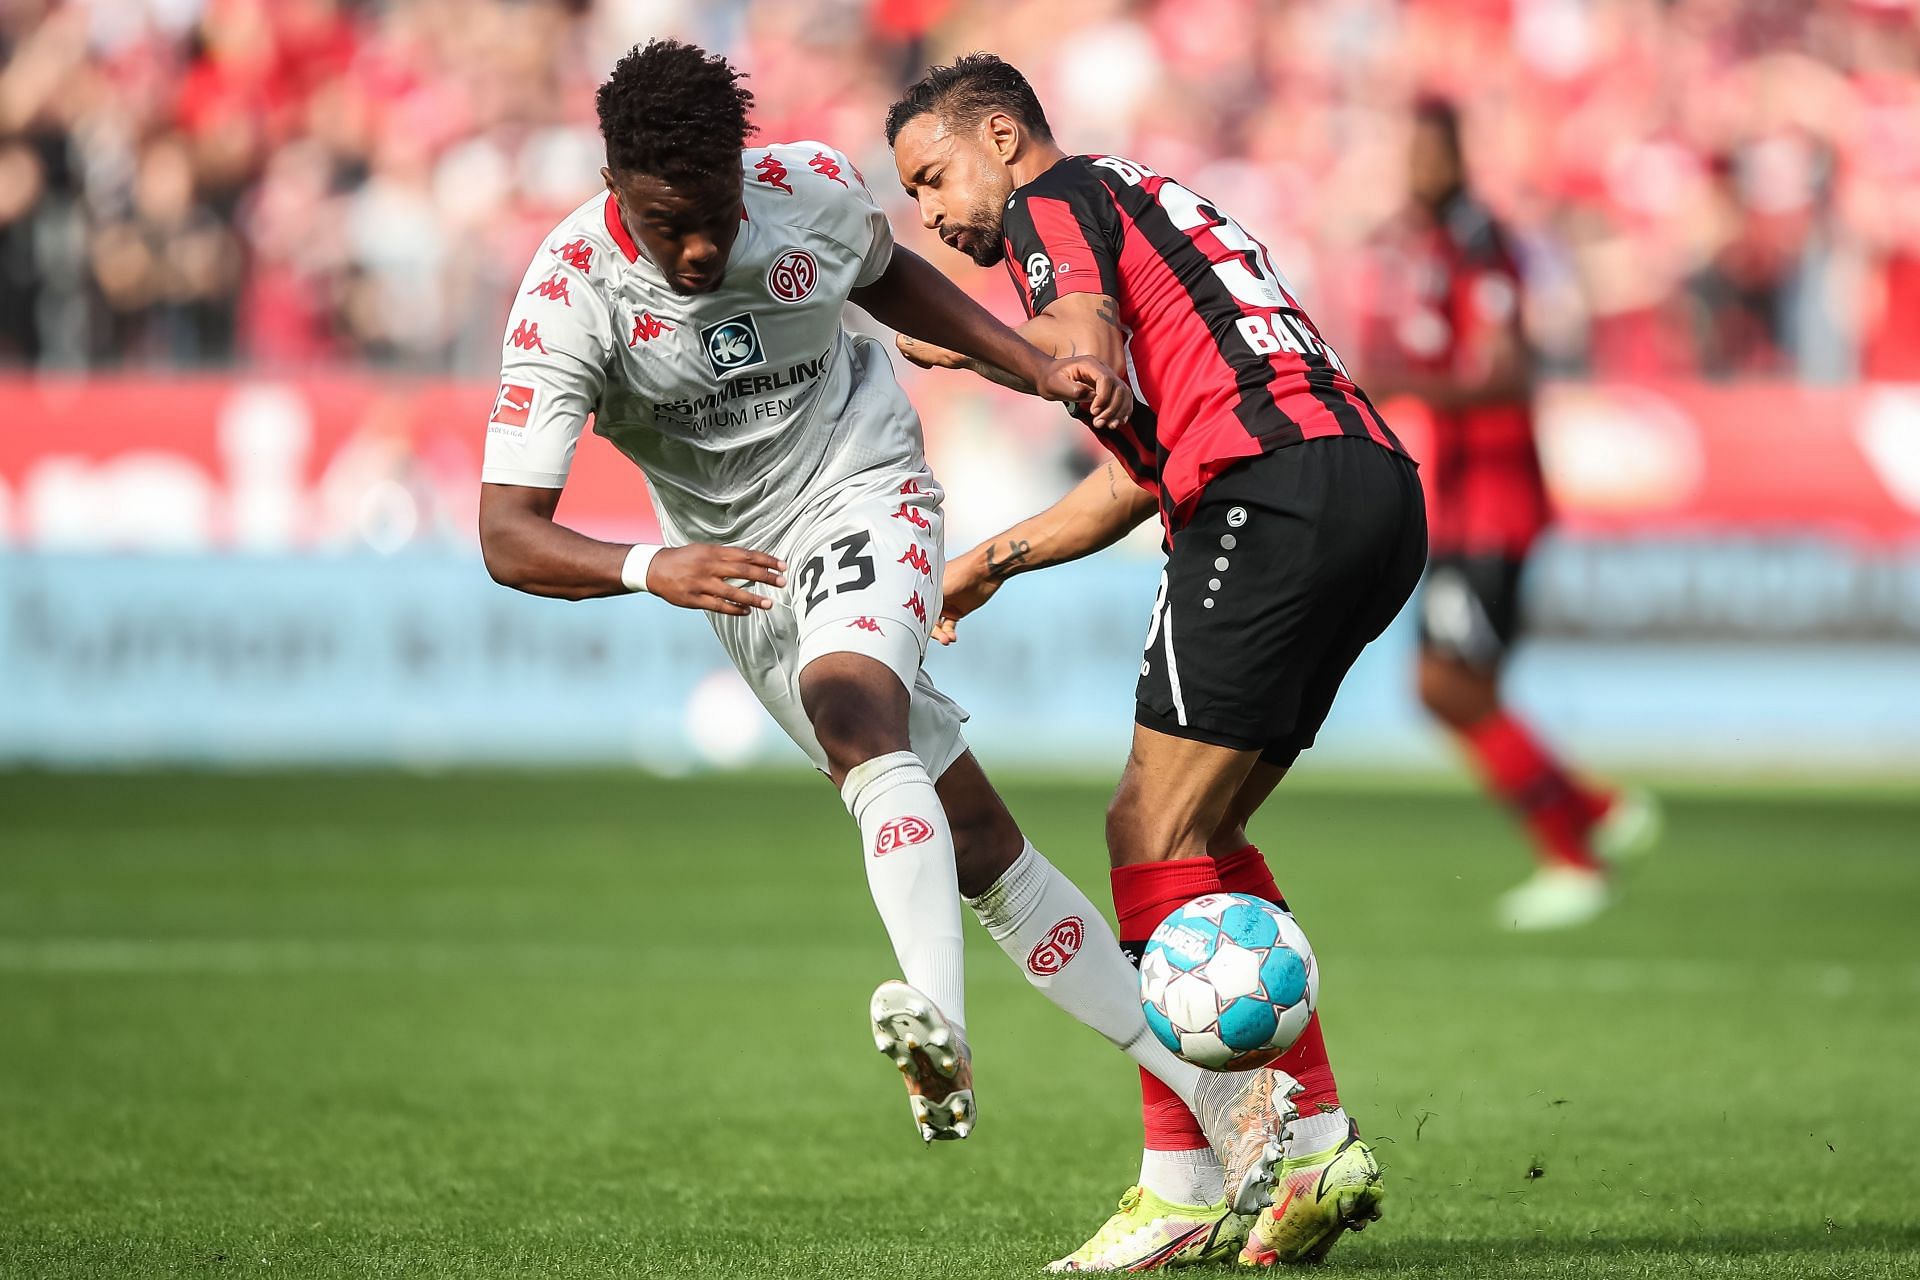 Bayer Leverkusen face Mainz on Friday